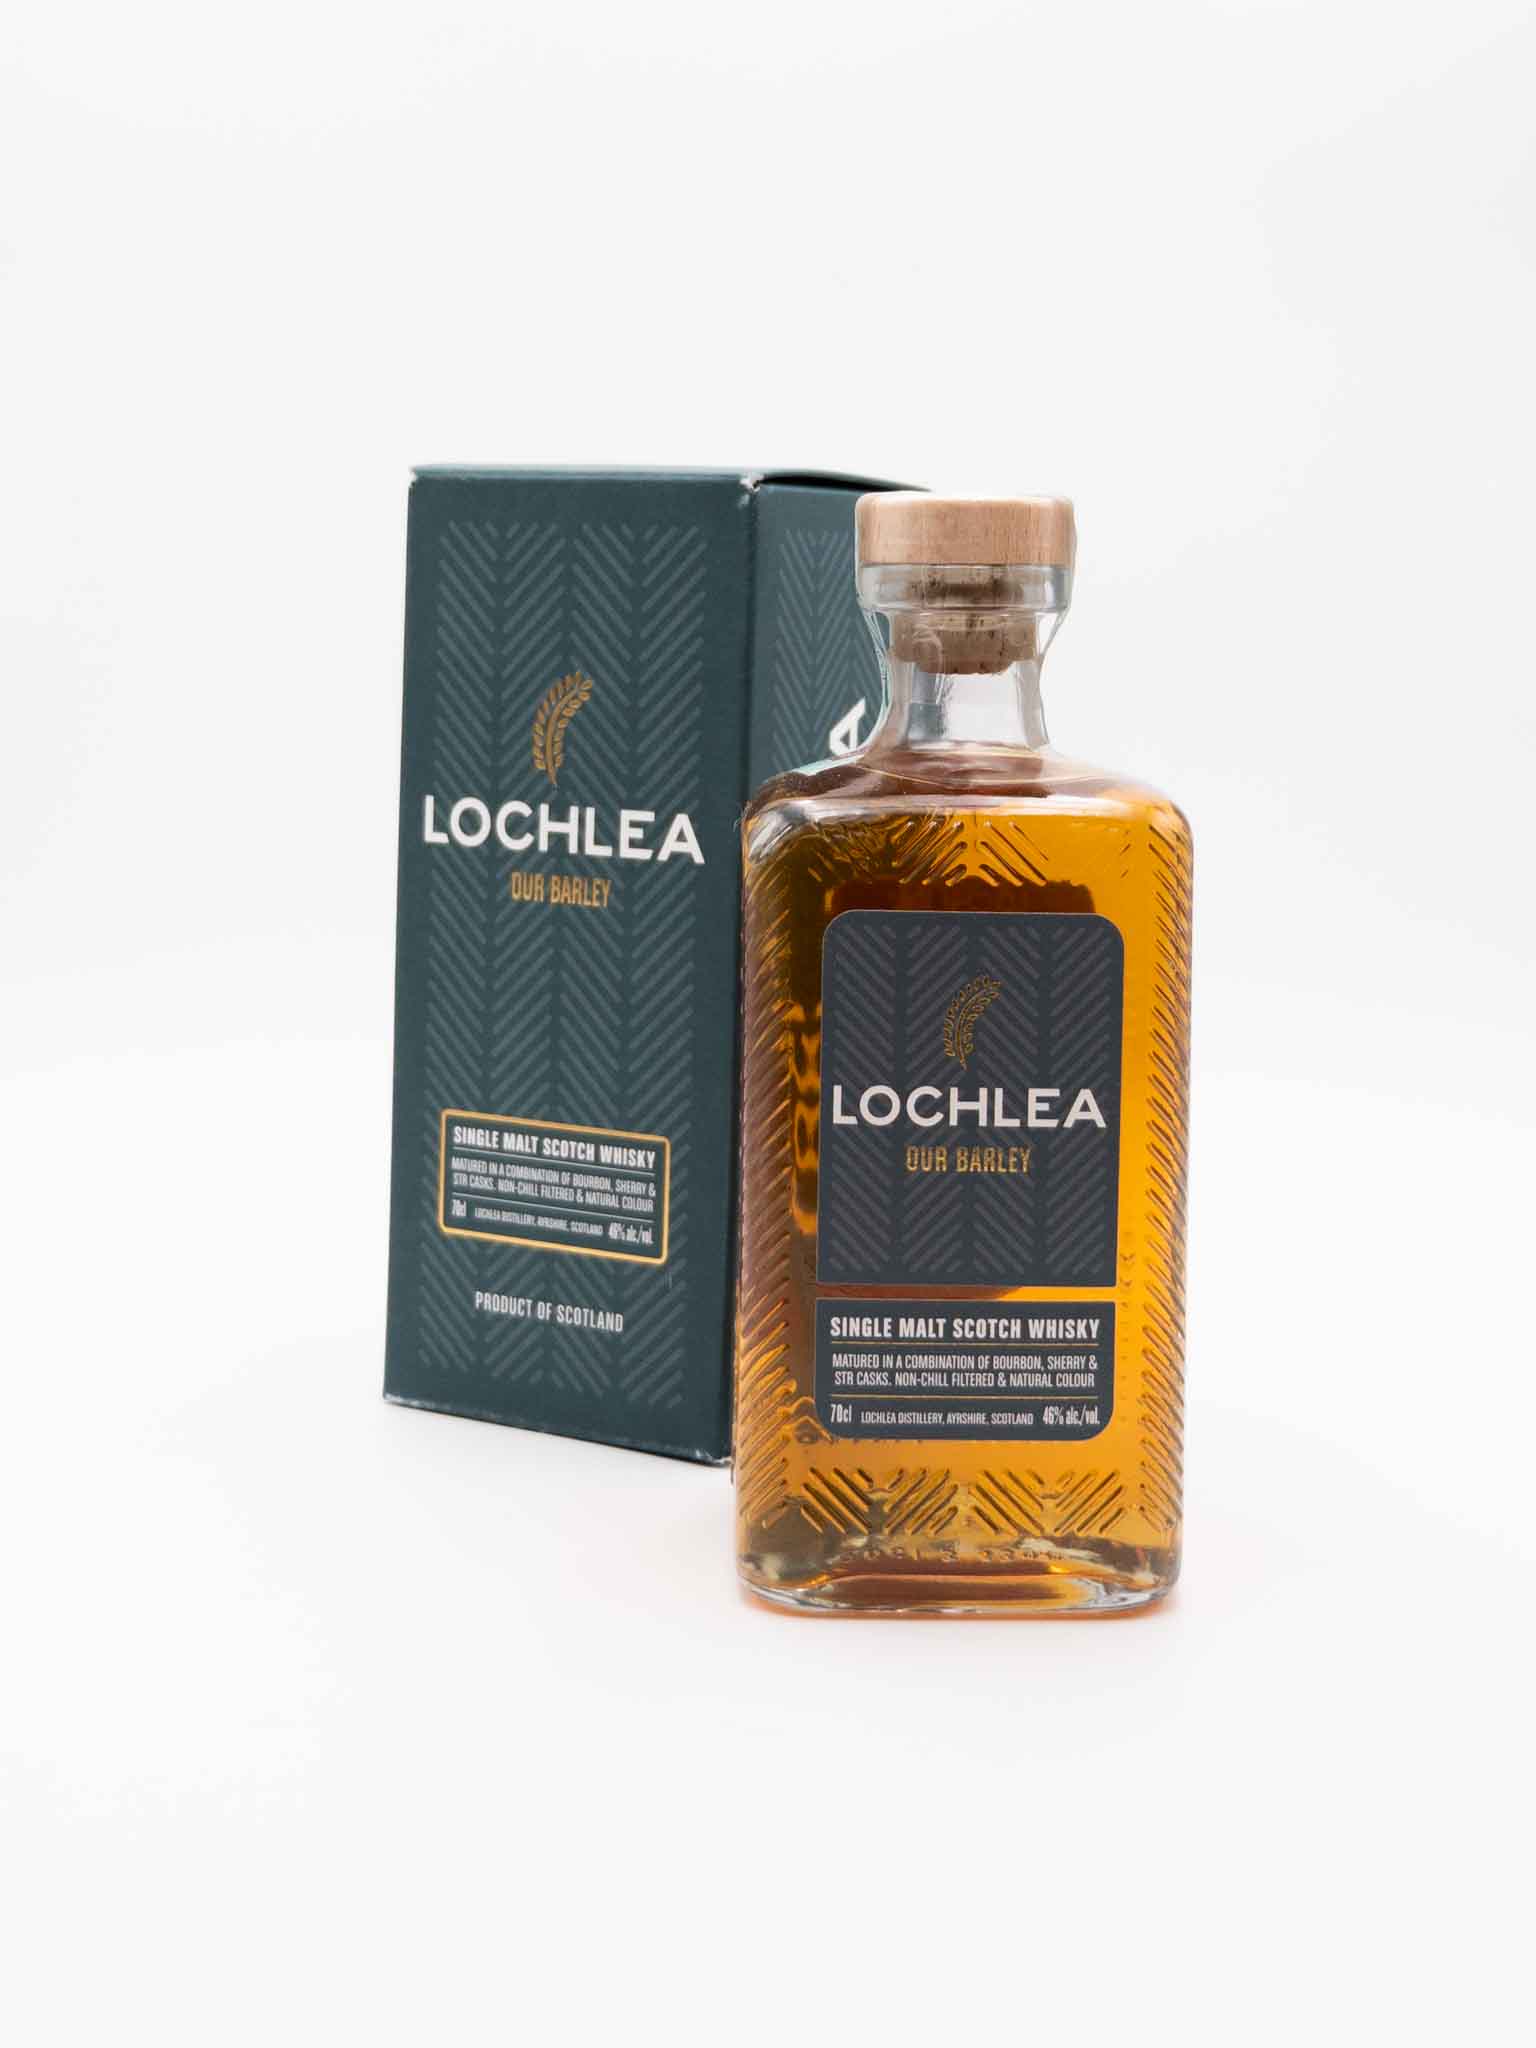 Scotch Whisky Single Malt ‘Our Barley’ - Lochlea Distillery